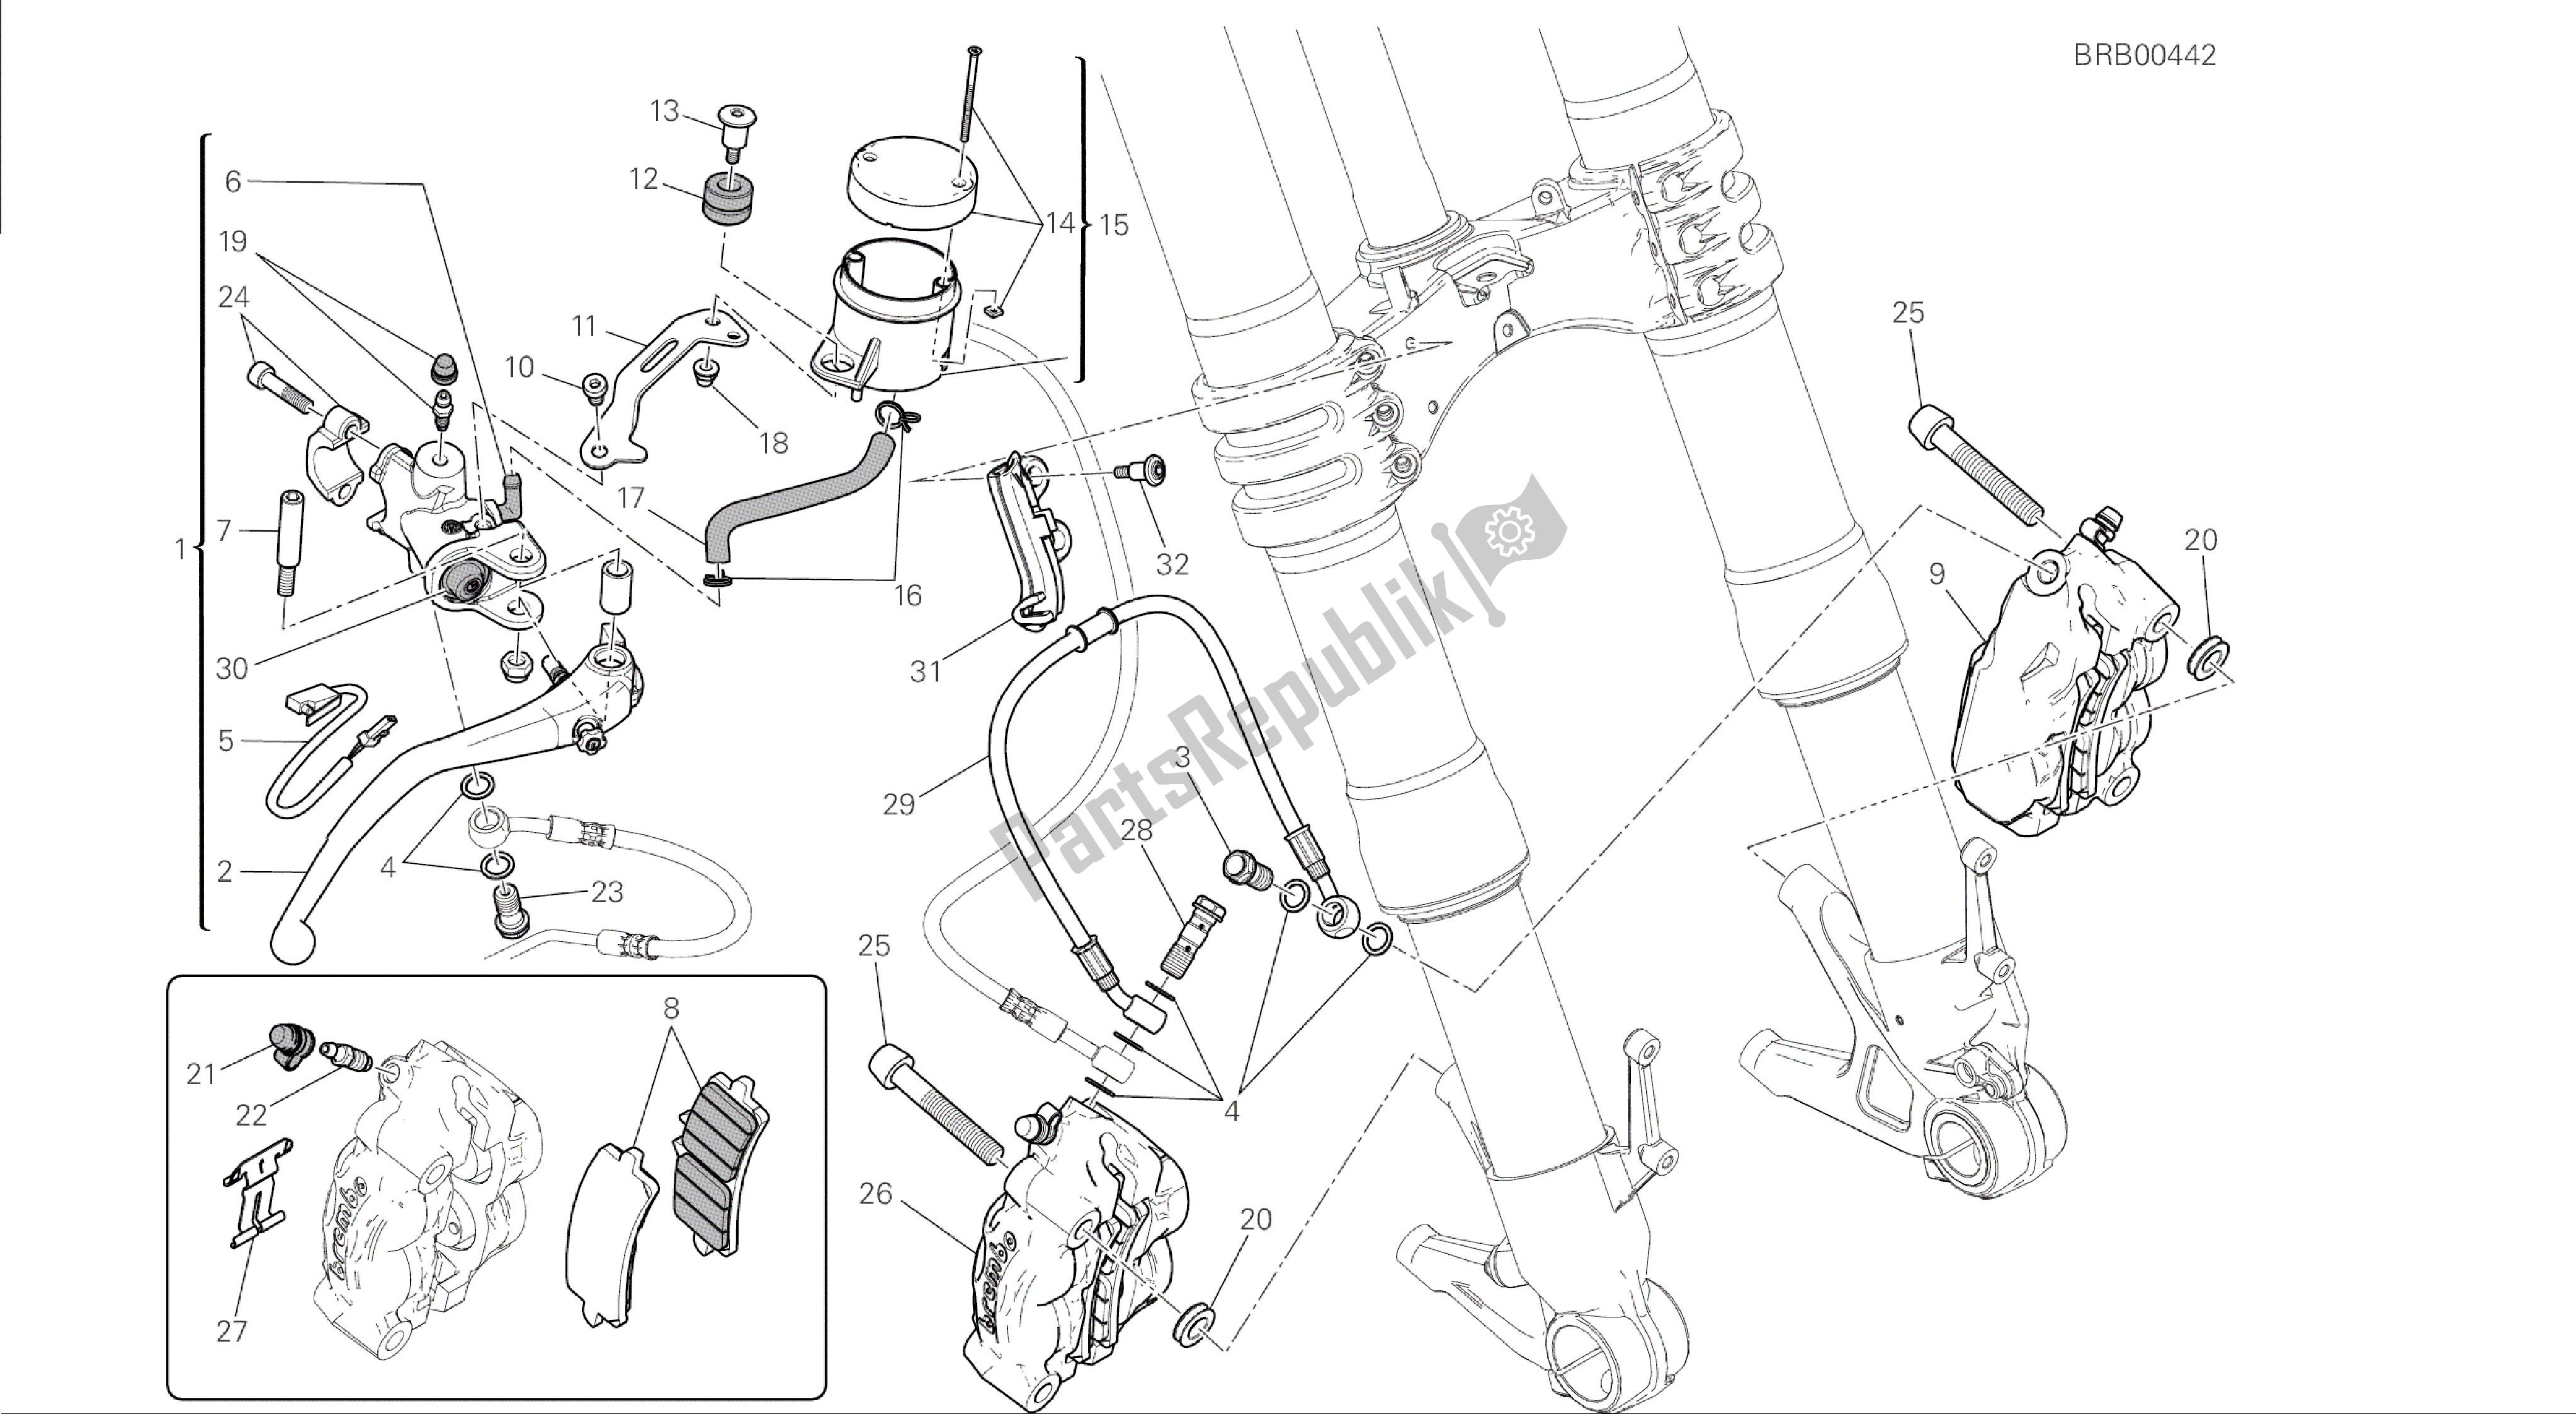 Alle onderdelen voor de Tekening 024 - Freno Anteriore [mod: 1199 Abs; Xst: Aus, Bra, Chn, Eur, Fra, Jap] Groepsframe van de Ducati Panigale ABS 1199 2014